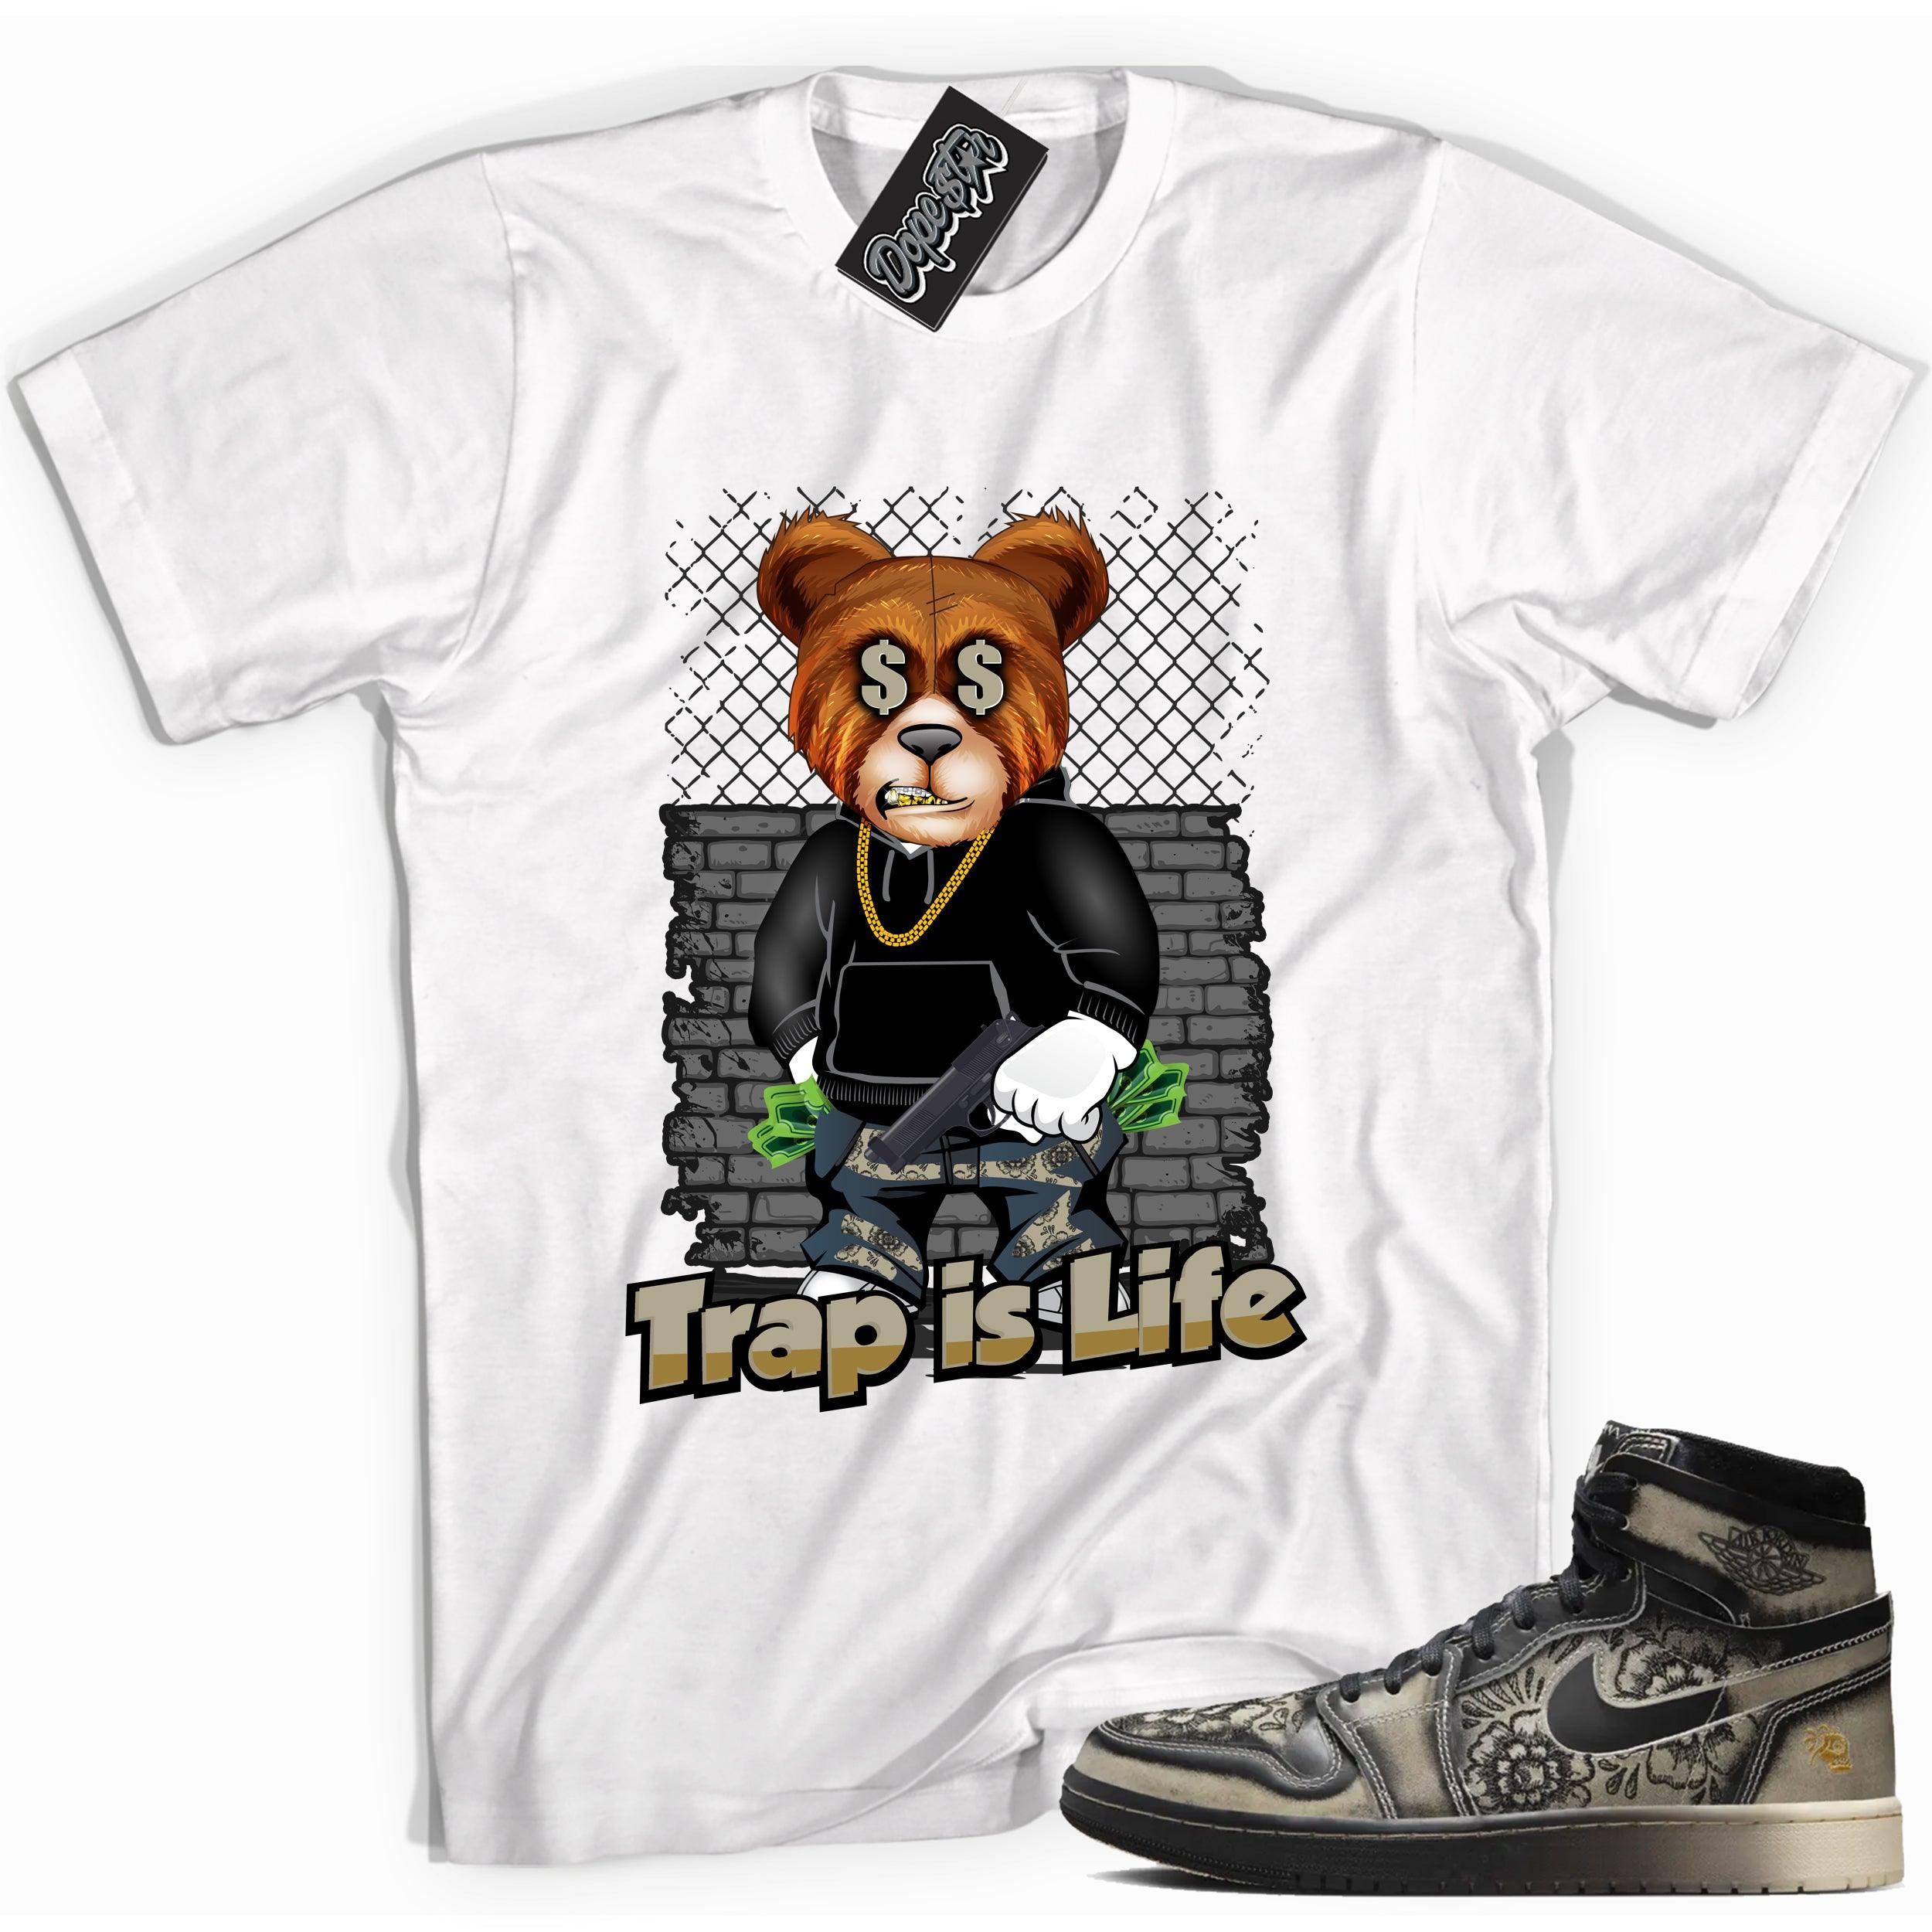 Air Jordan 1 High Zoom Comfort 2 Dia de Muertos Shirt - TRAP IS LIFE - Sneaker Shirts Outlet